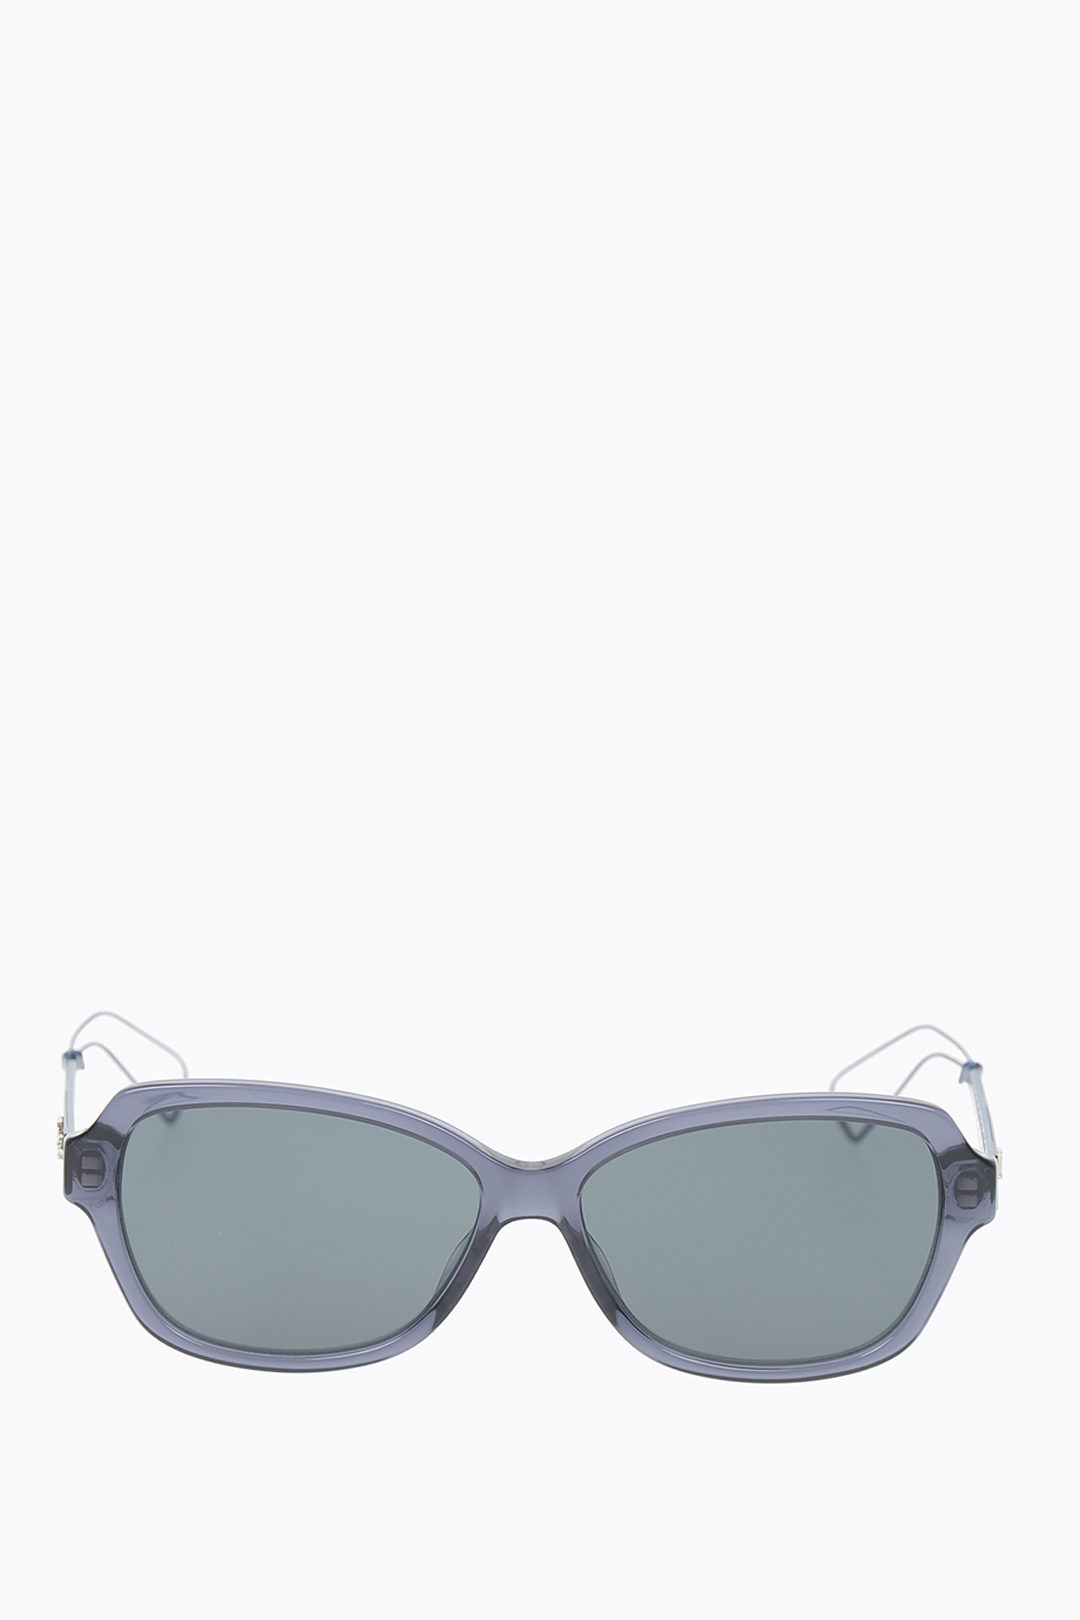 Dior Wrap Sunglasses men - Glamood Outlet